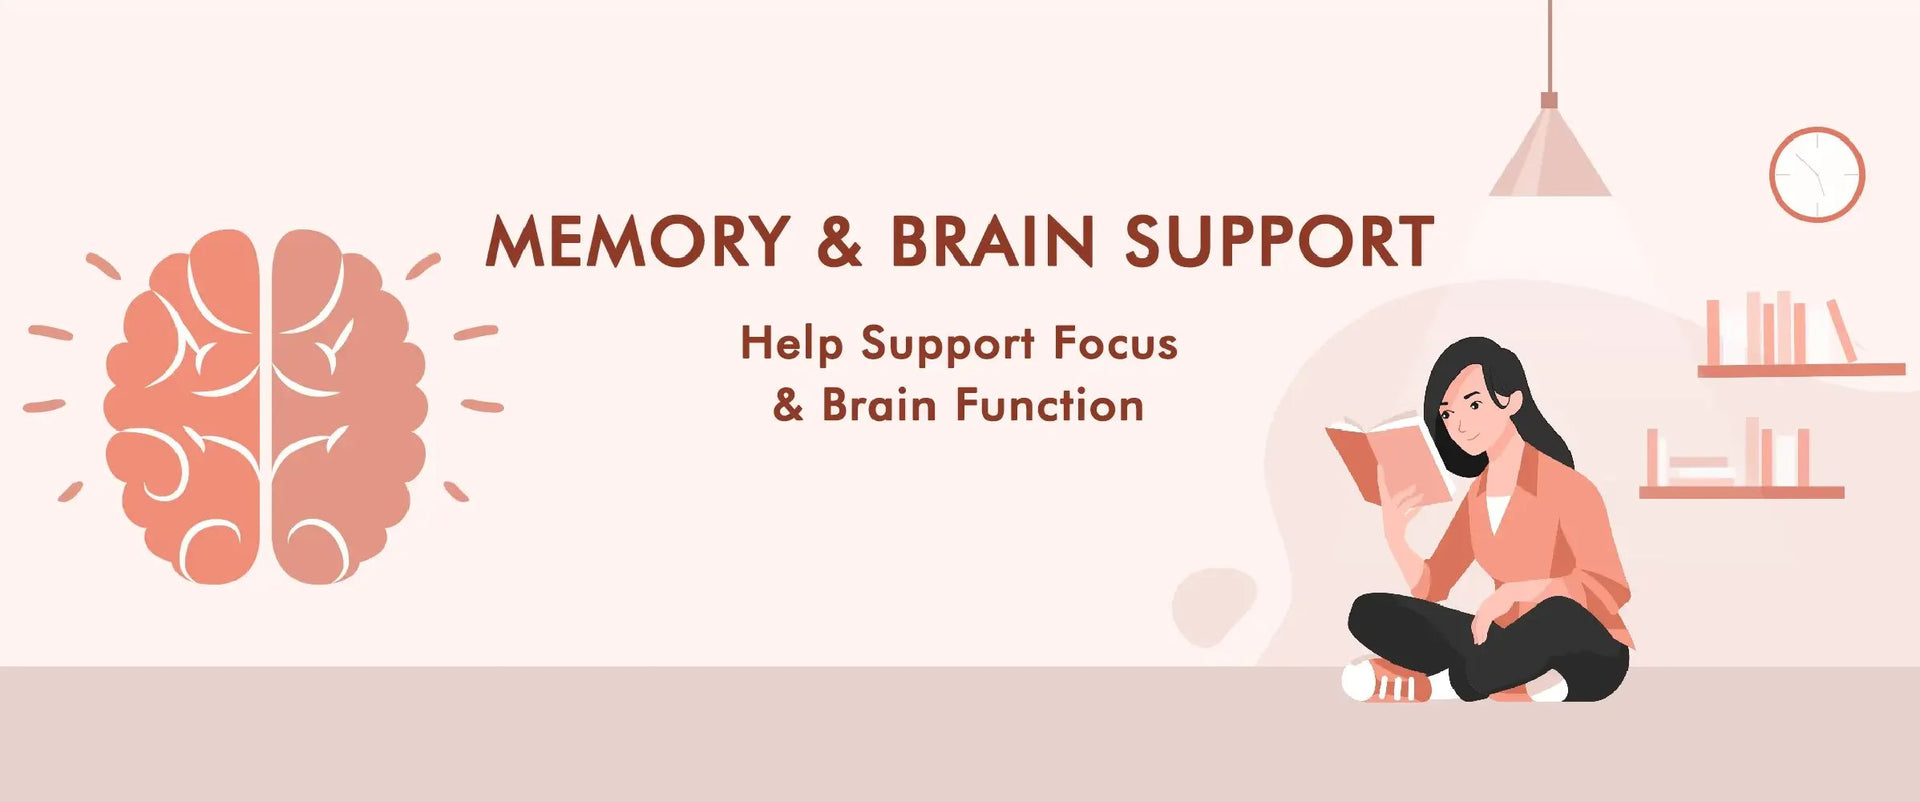 Memory & Brain Support